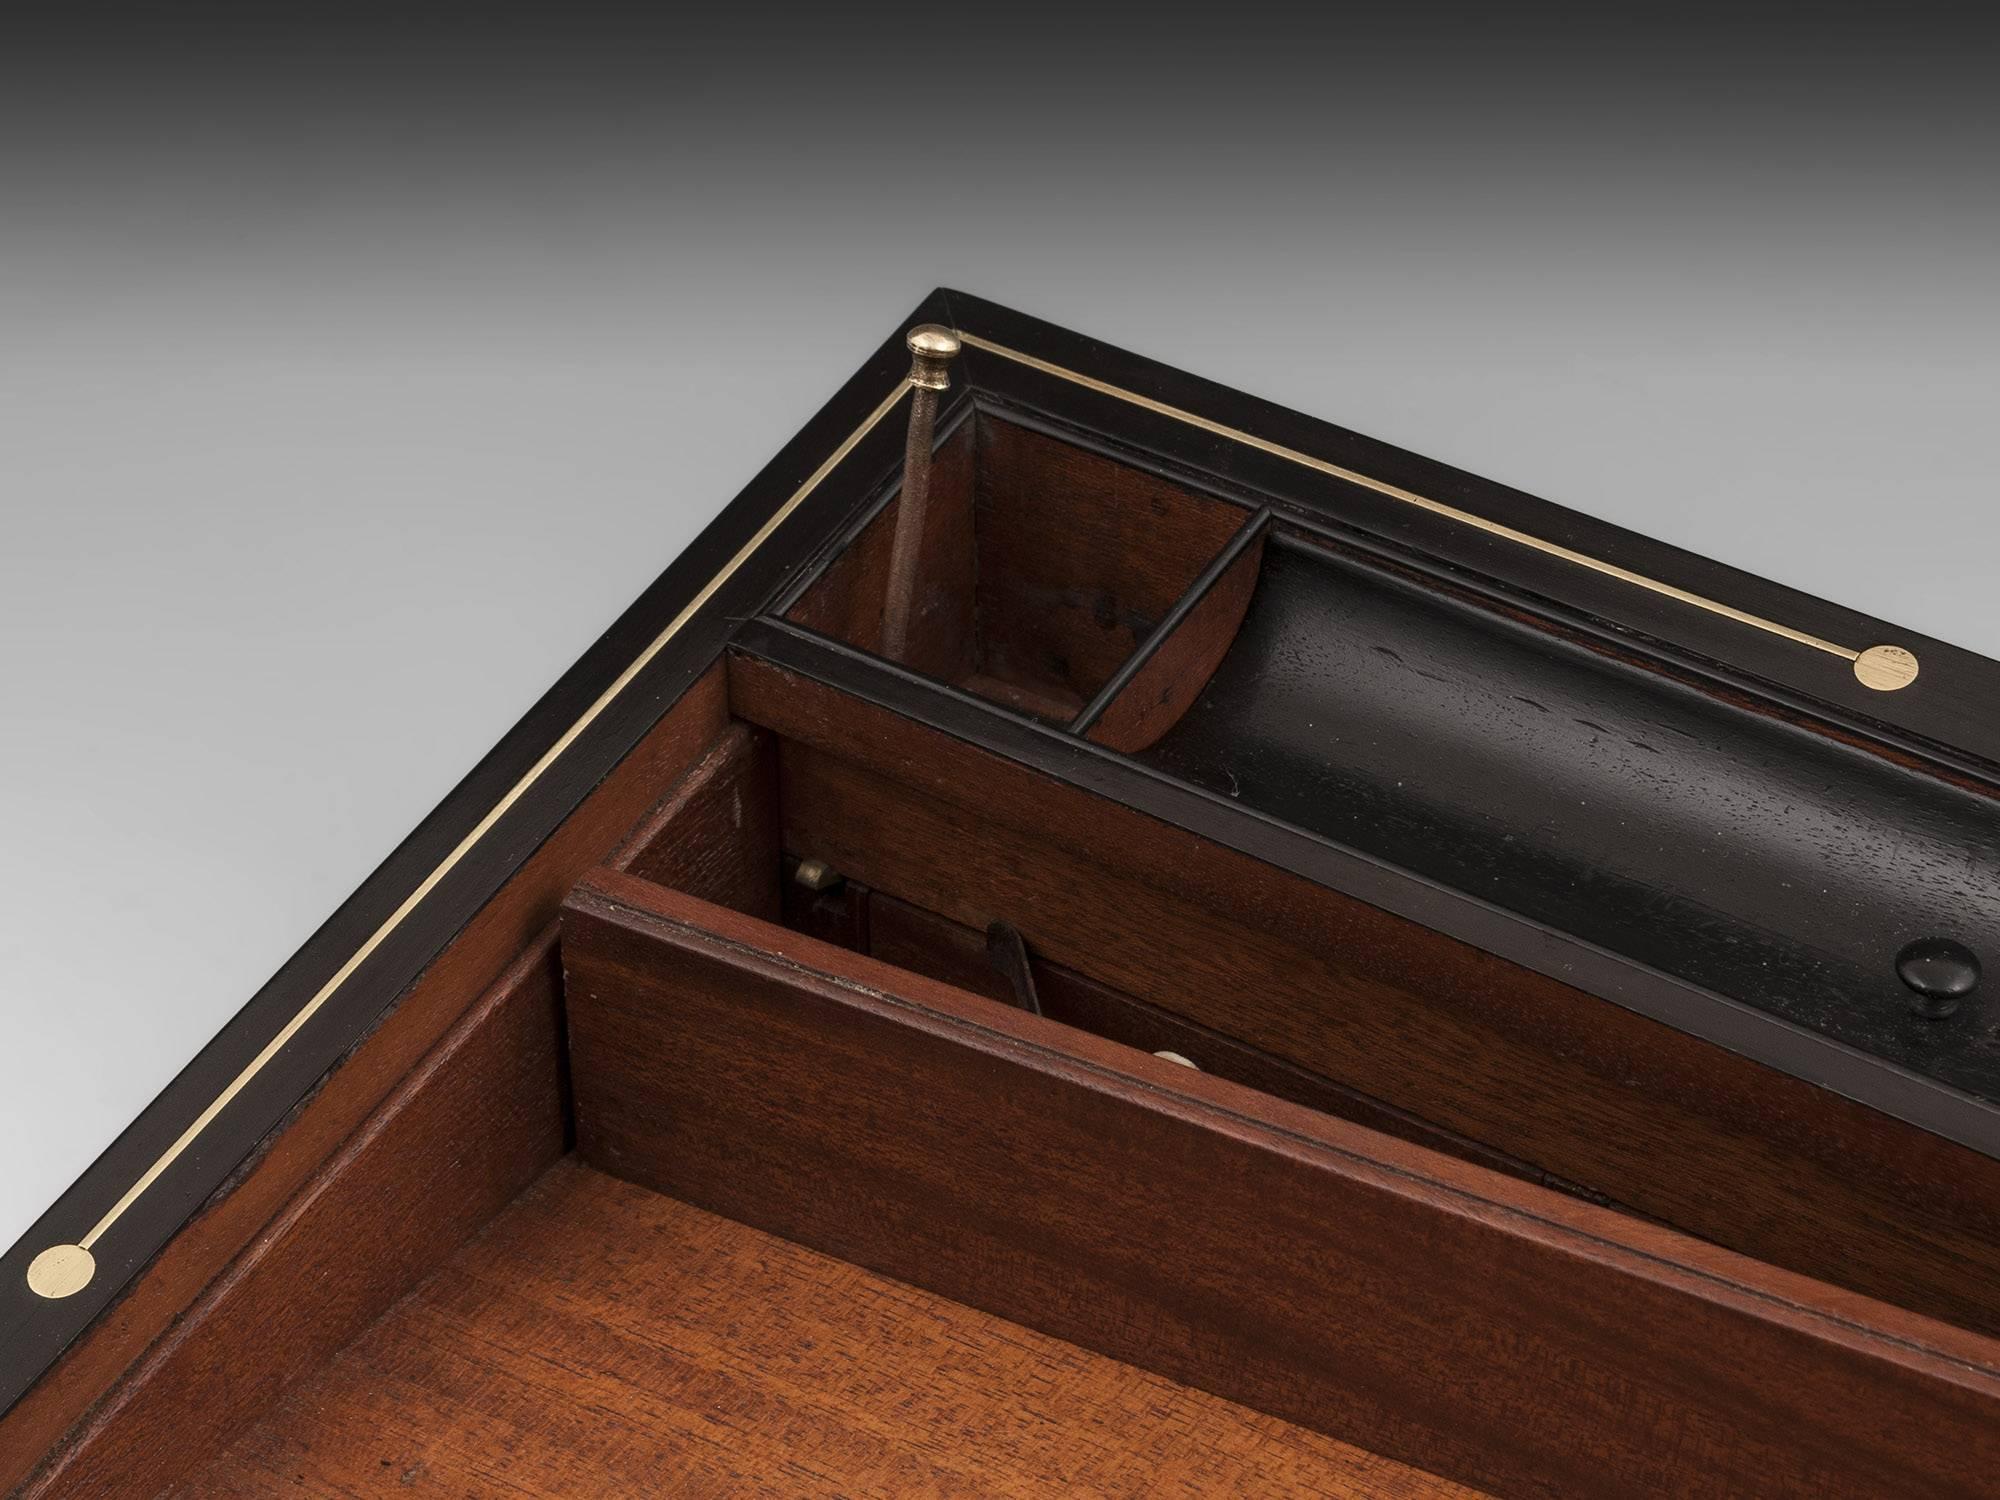 Mahogany Antique Brass Bound David Edwards Writing Box with Secret Compartment